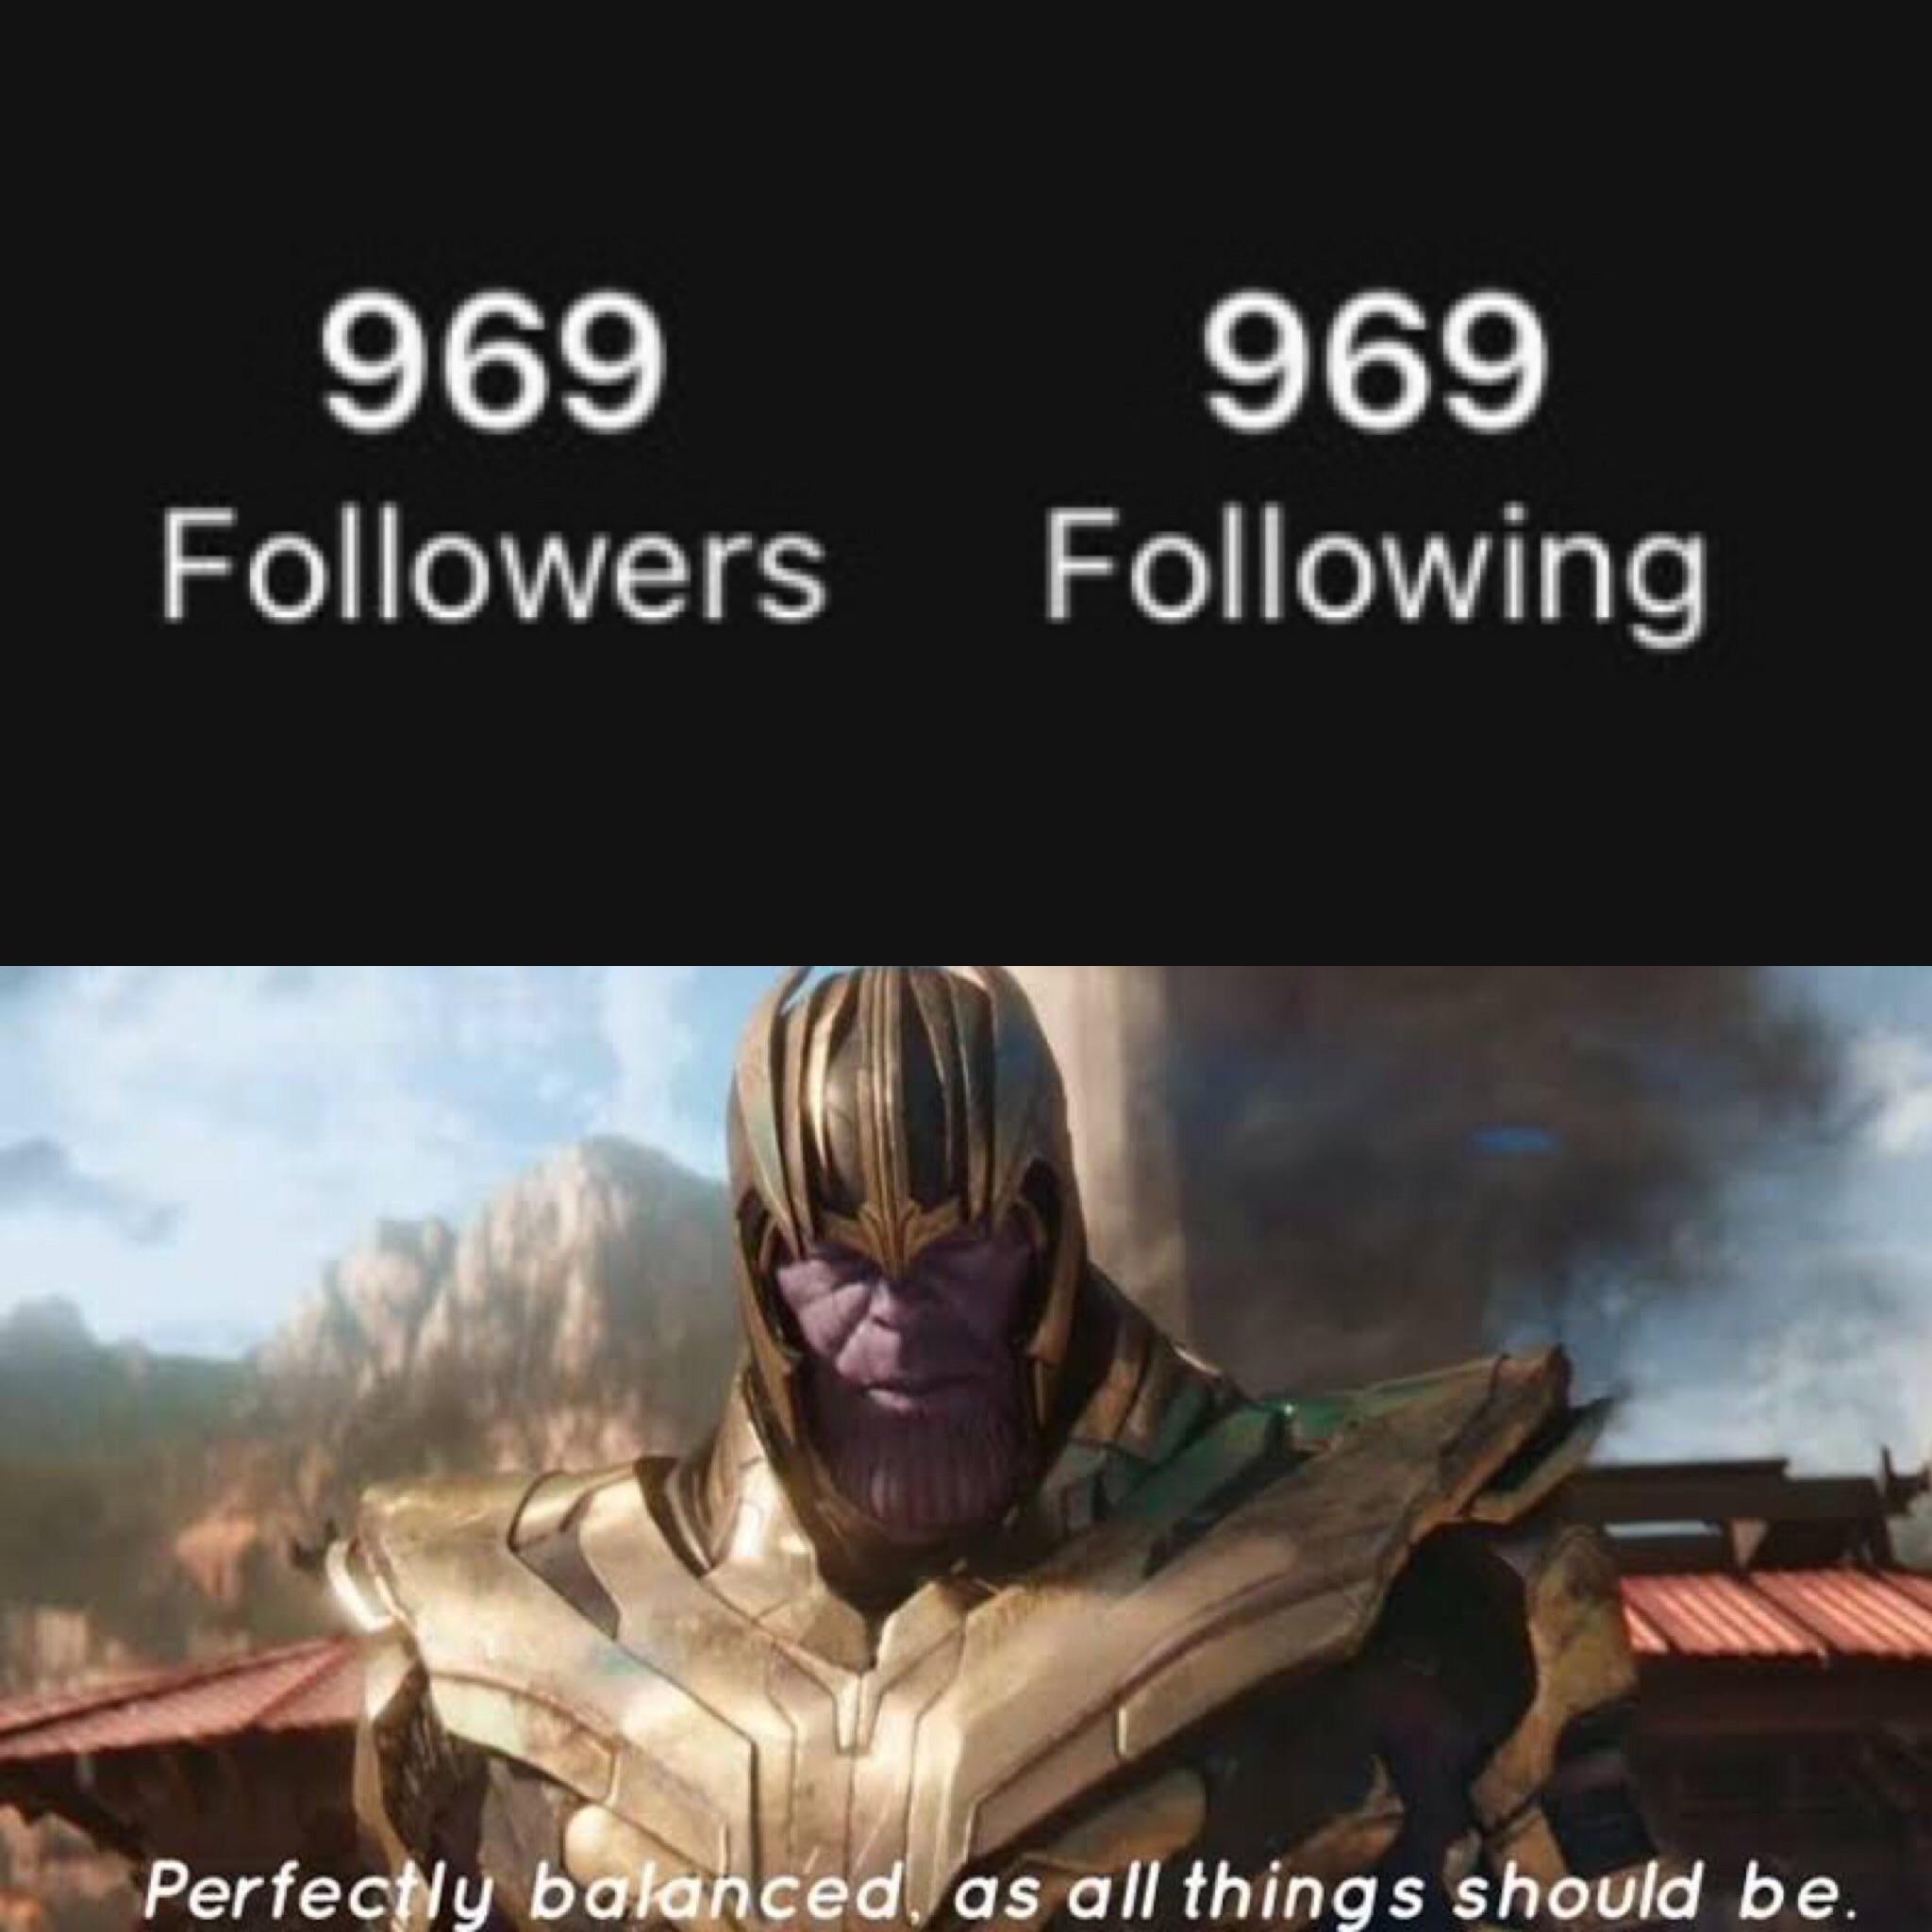 dank memes - perfectly balanced as all things should - 969 ers 969 ing Perfectly balanced, as all things should be